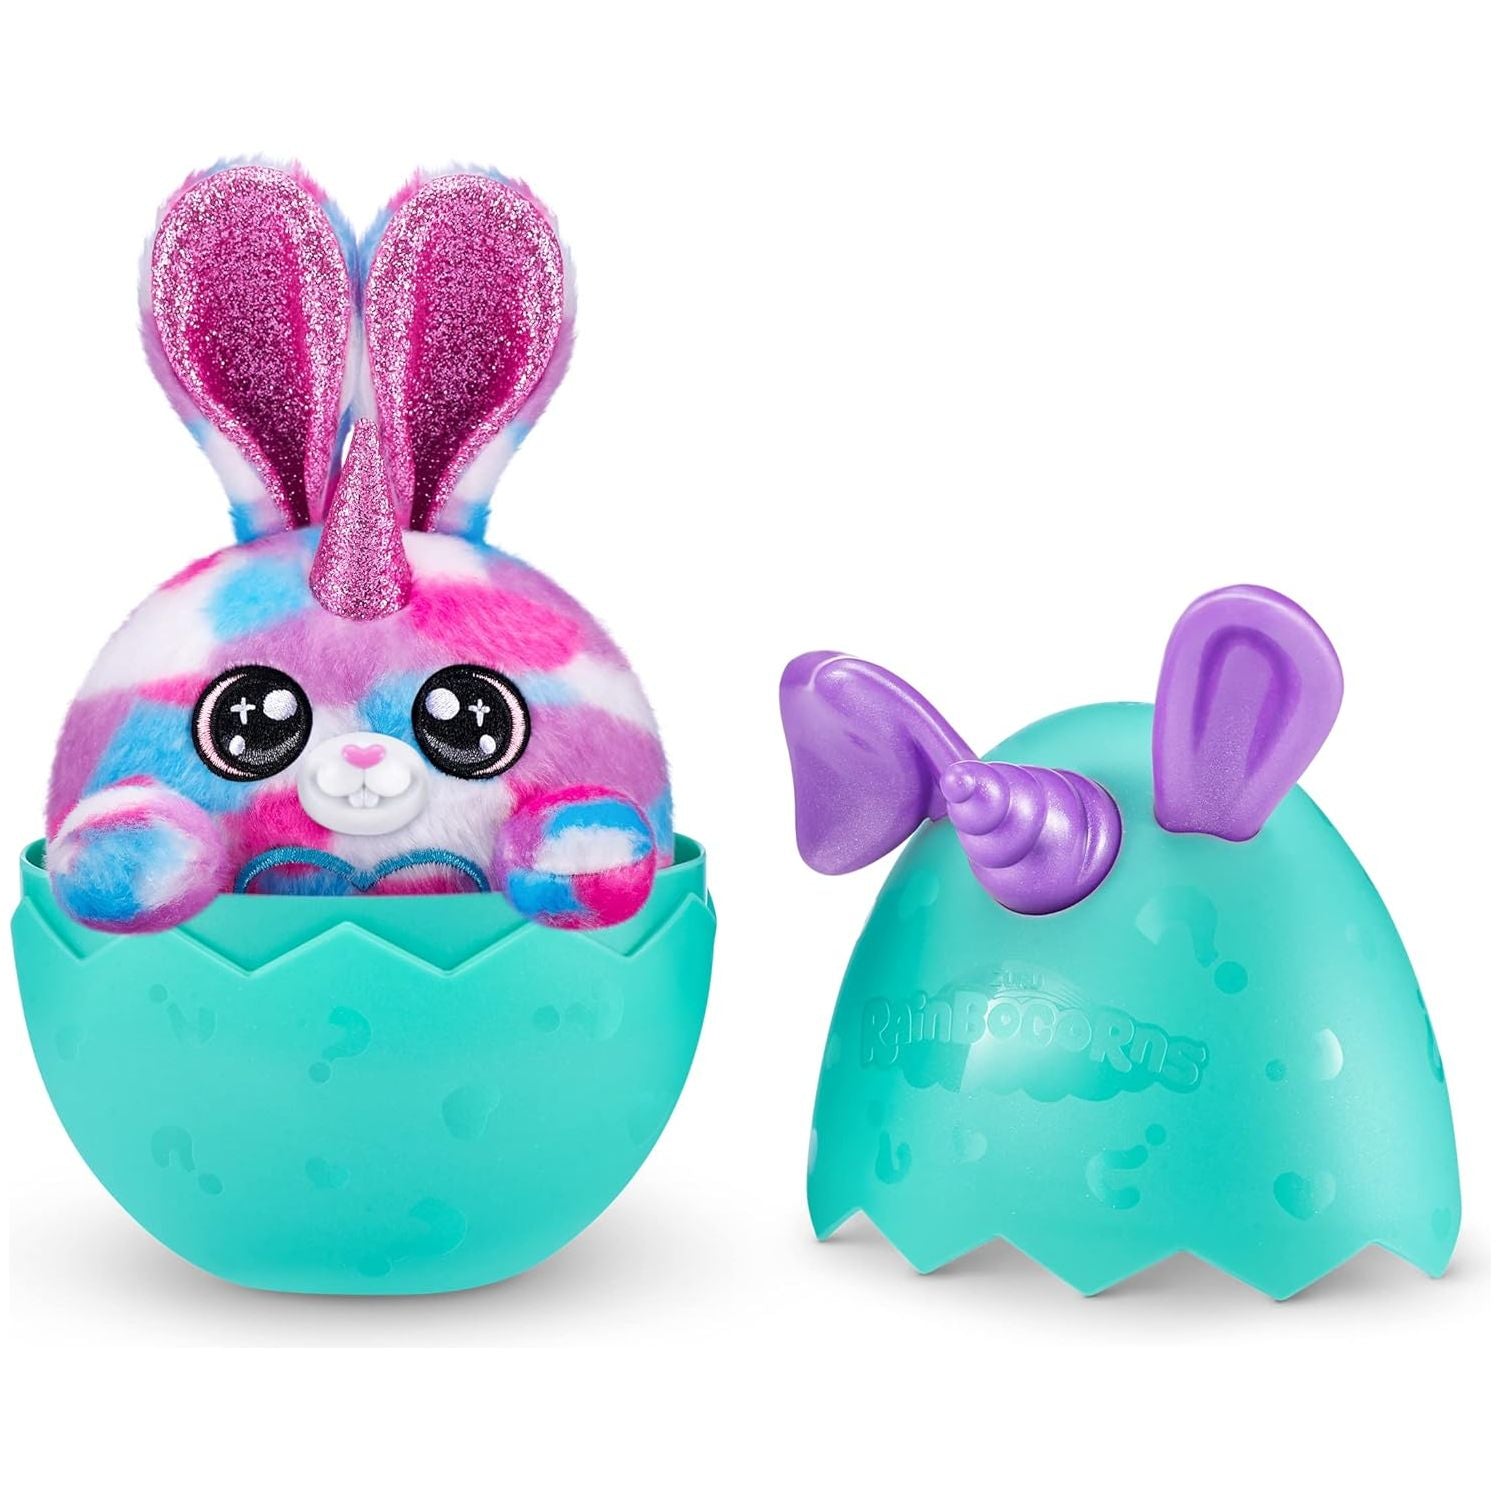 Rainbocorns Bunnycorn Surprise Series 2 by ZURU Rabbit Bunny Plush Toy Girls Gift Idea